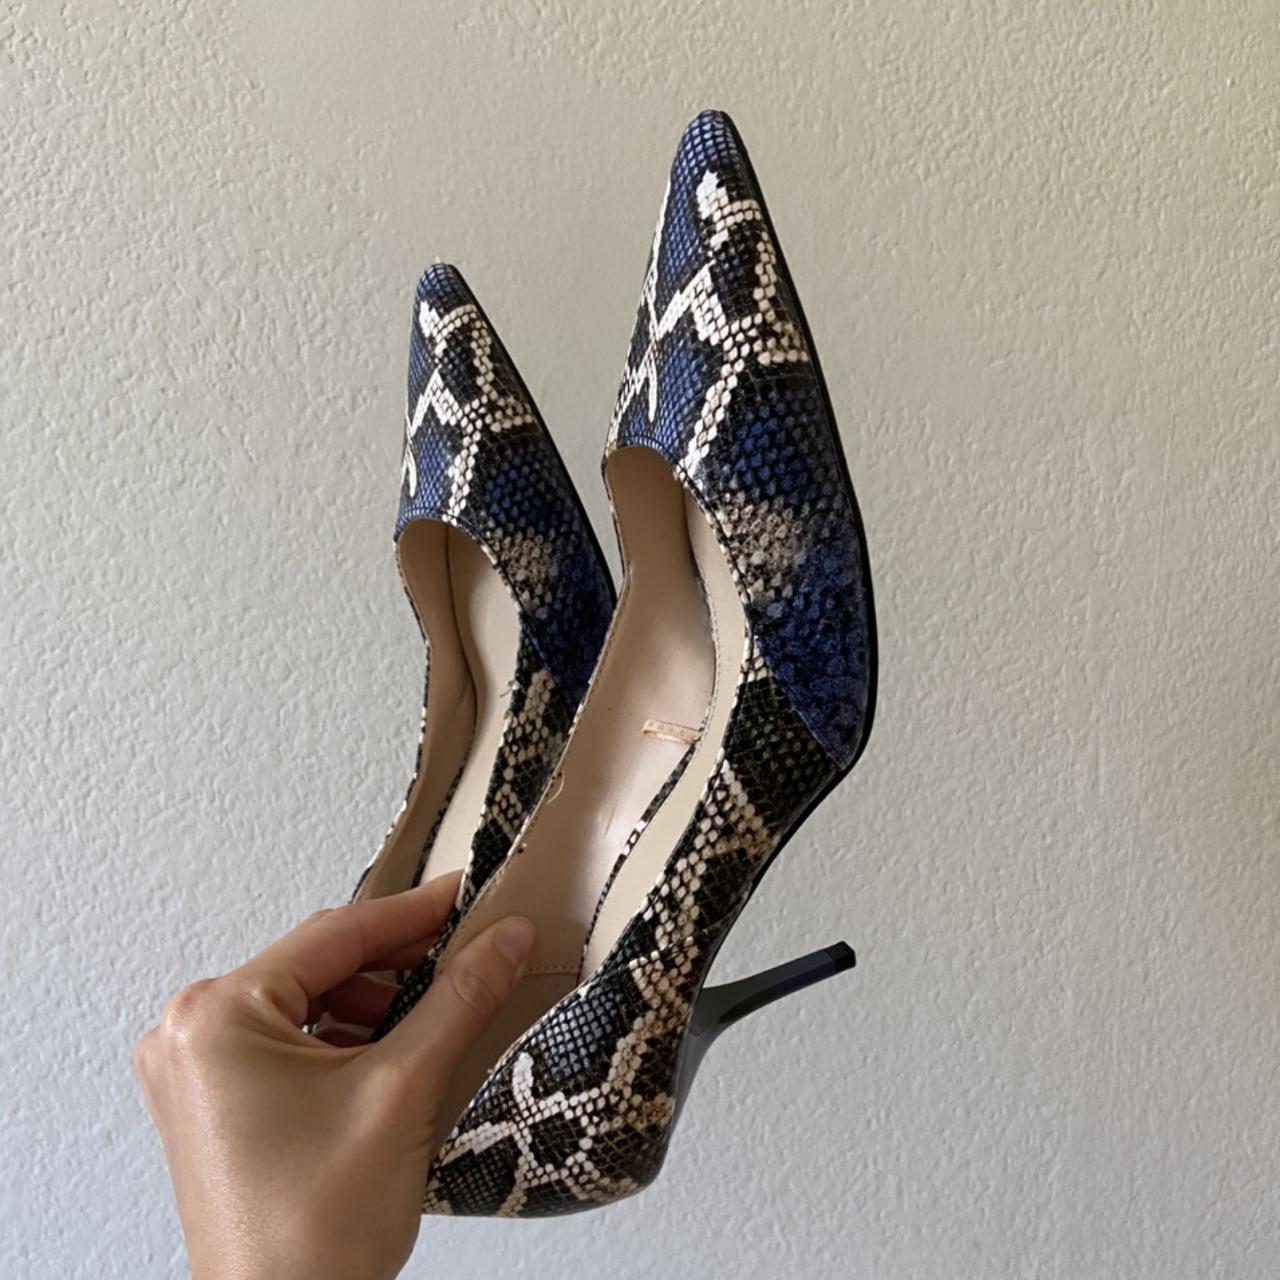 Product Image 1 - Zara kitten heels! Blue snakeskin